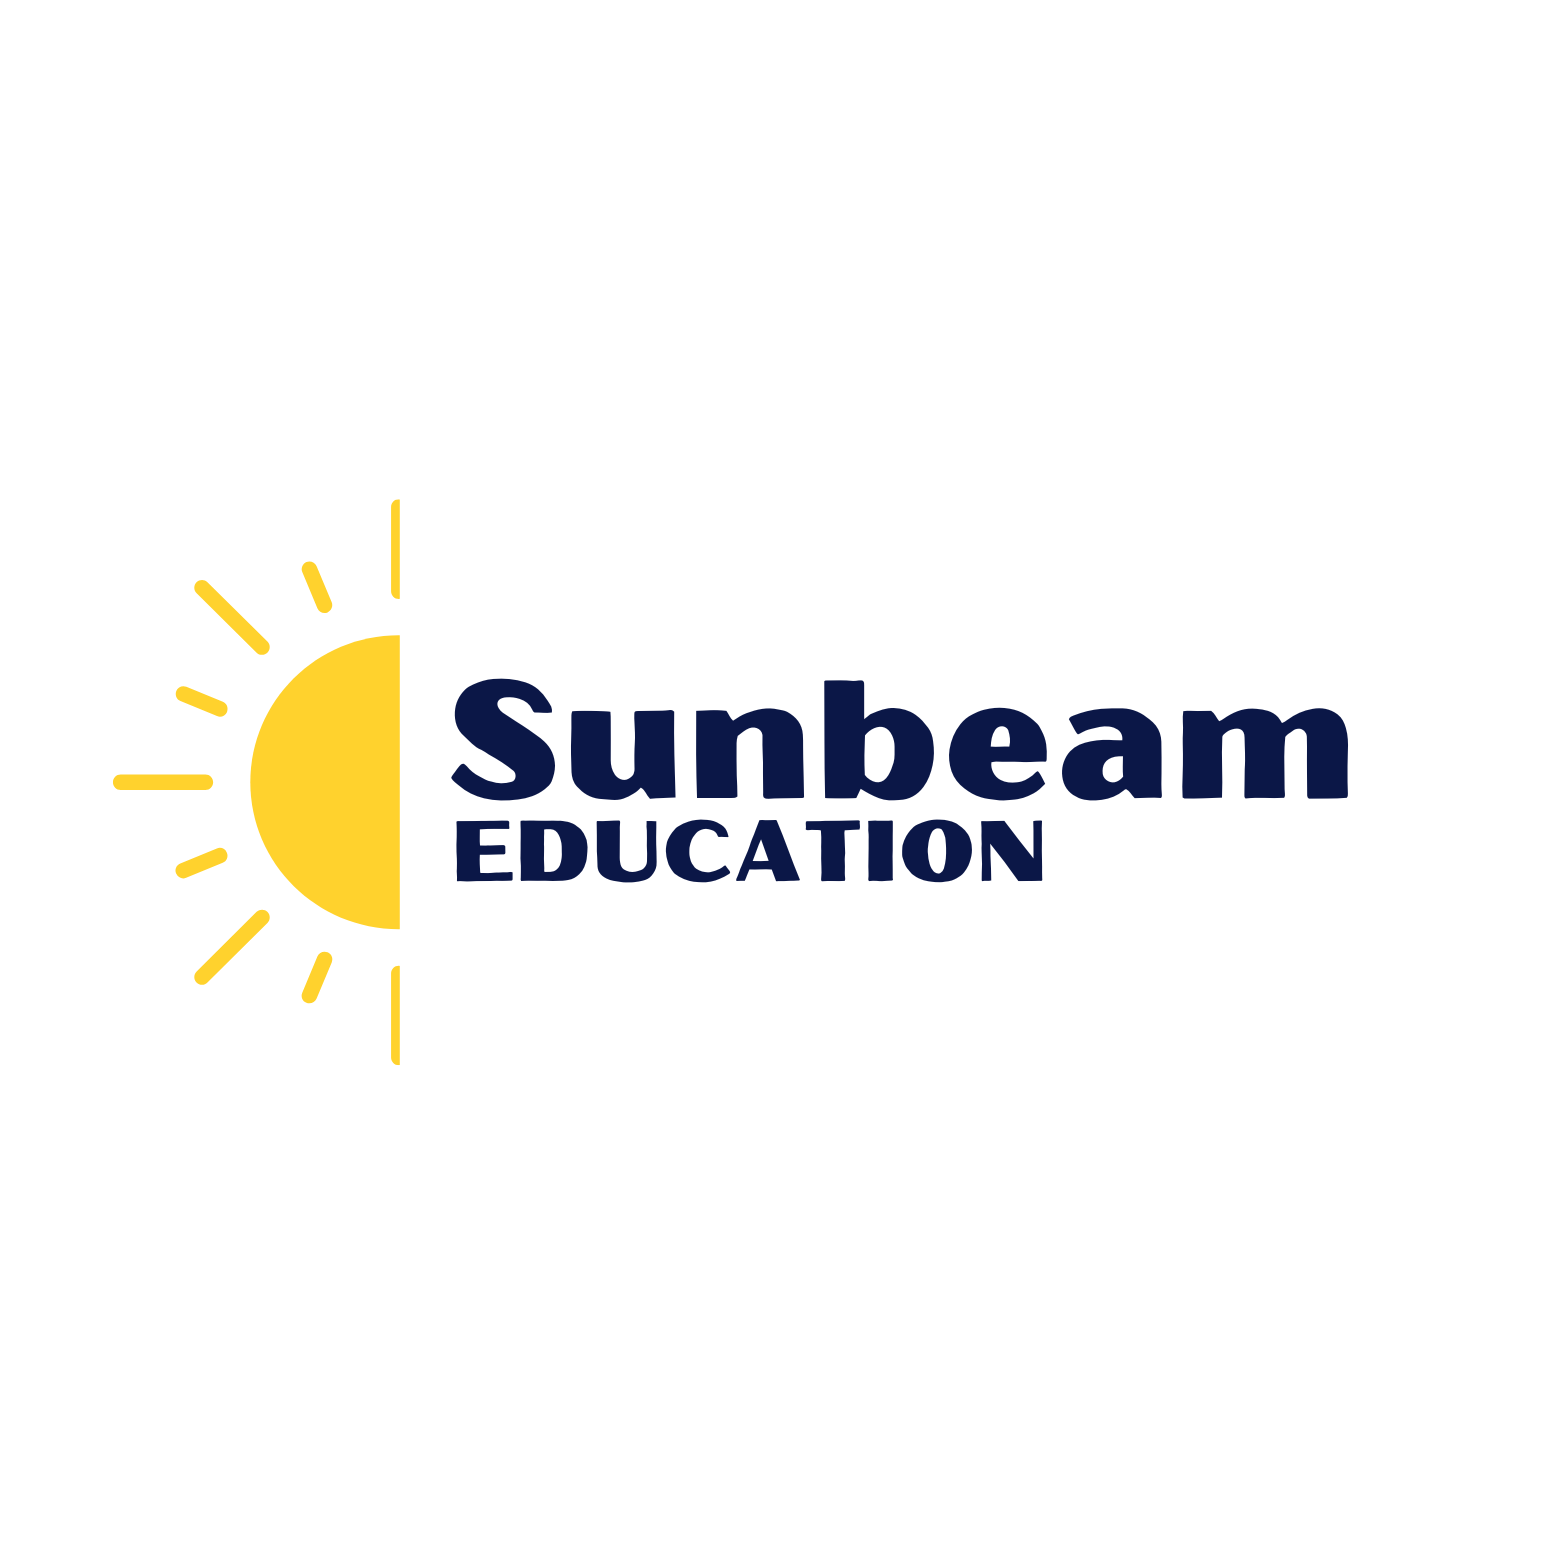 sunbeam education logo